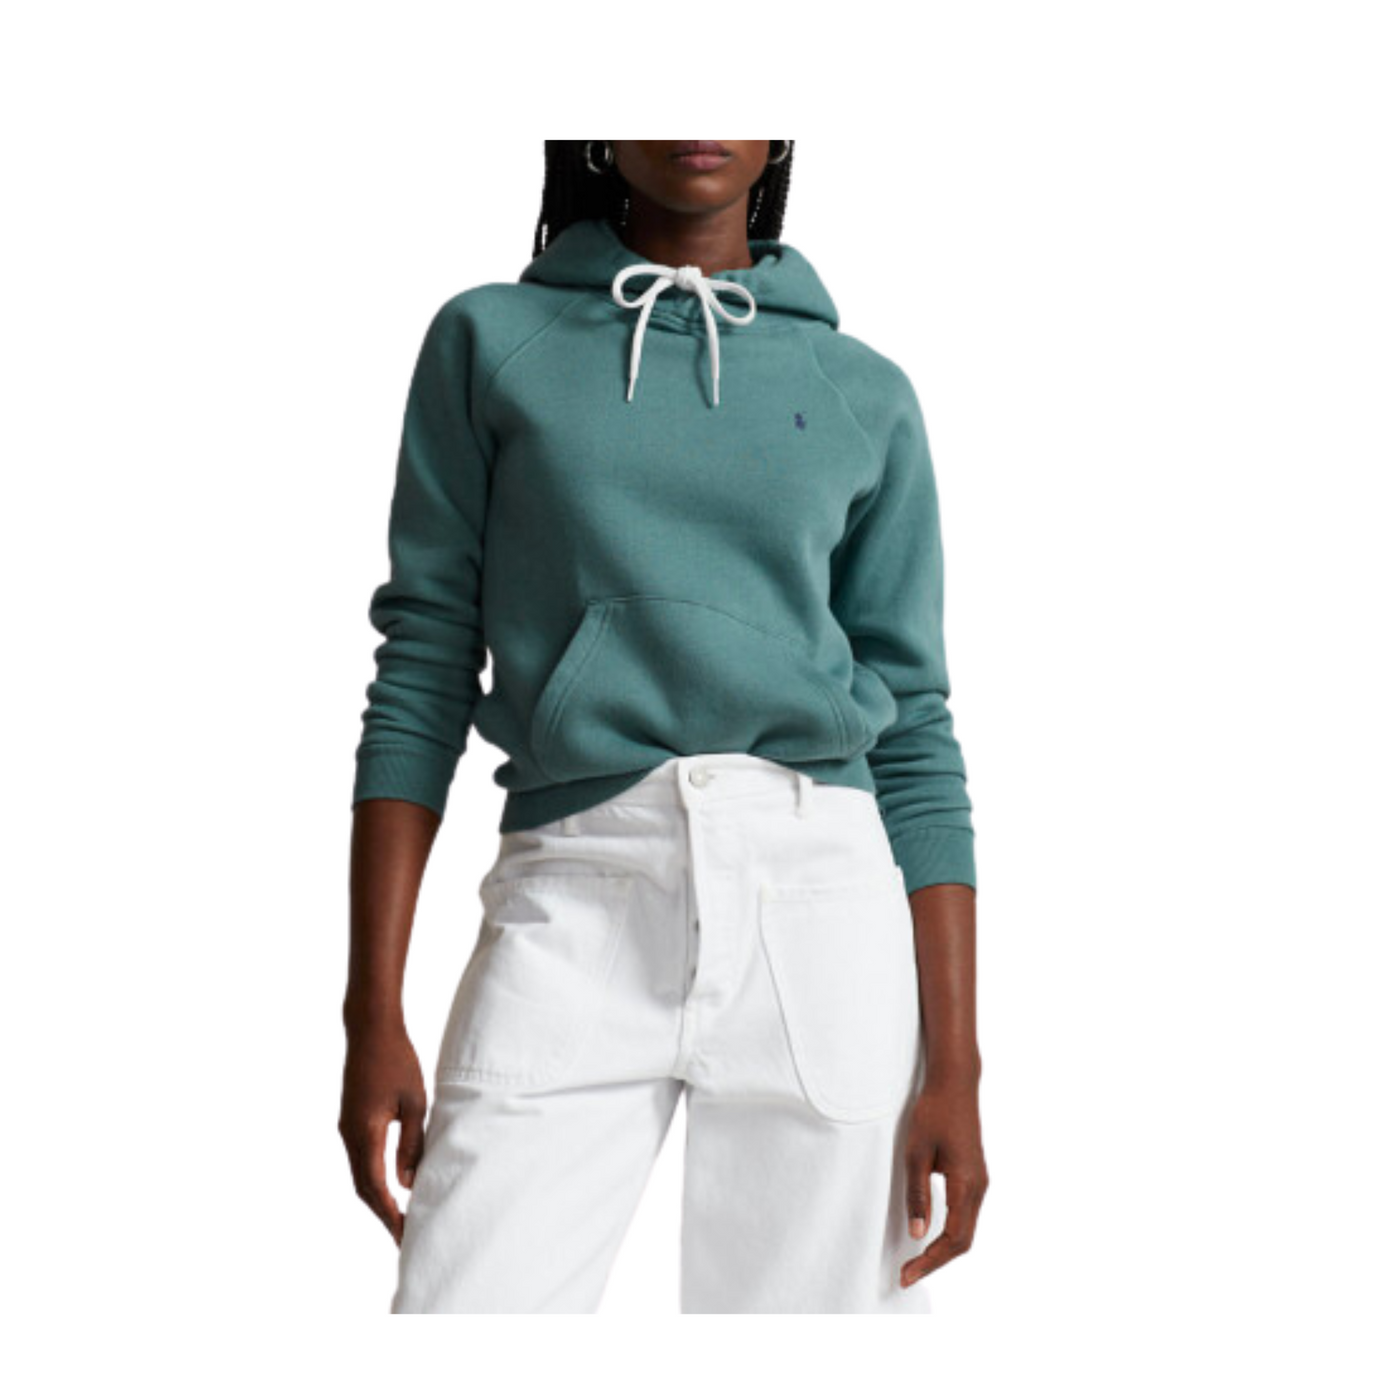 Women's sweatshirt with green hood